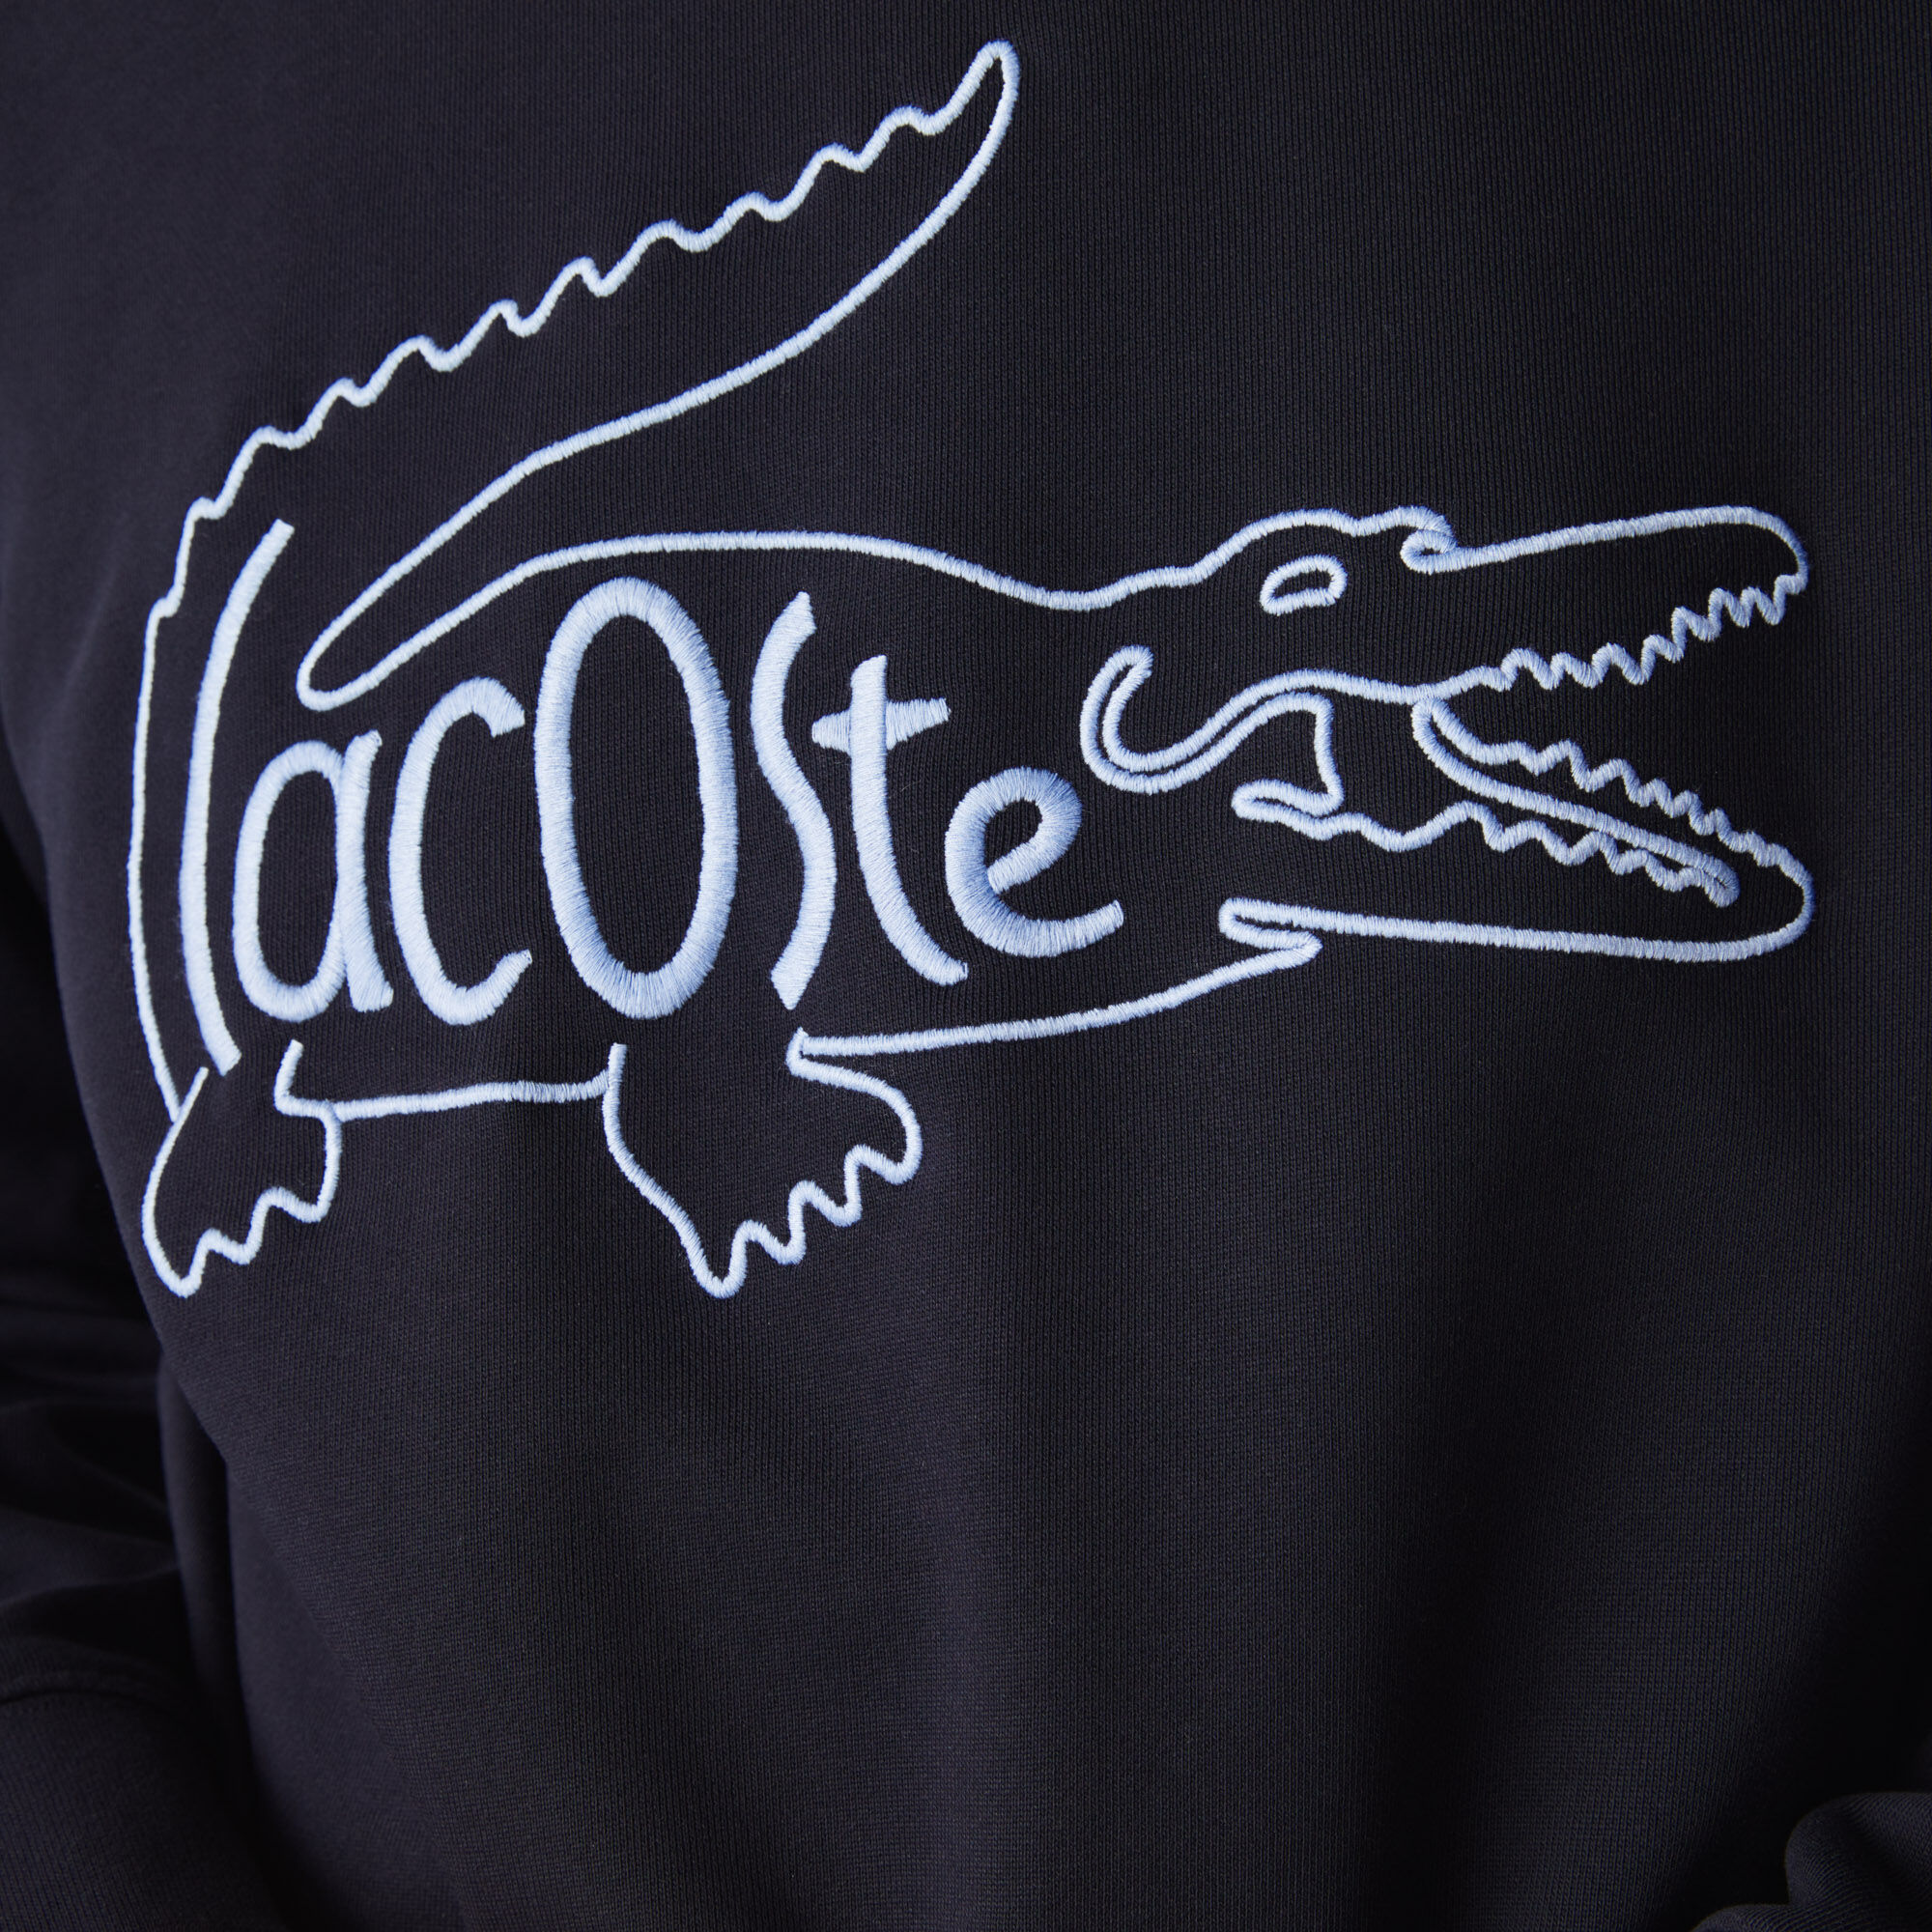 Men’s Crew Neck Embroidered Crocodile Cotton Fleece Sweatshirt